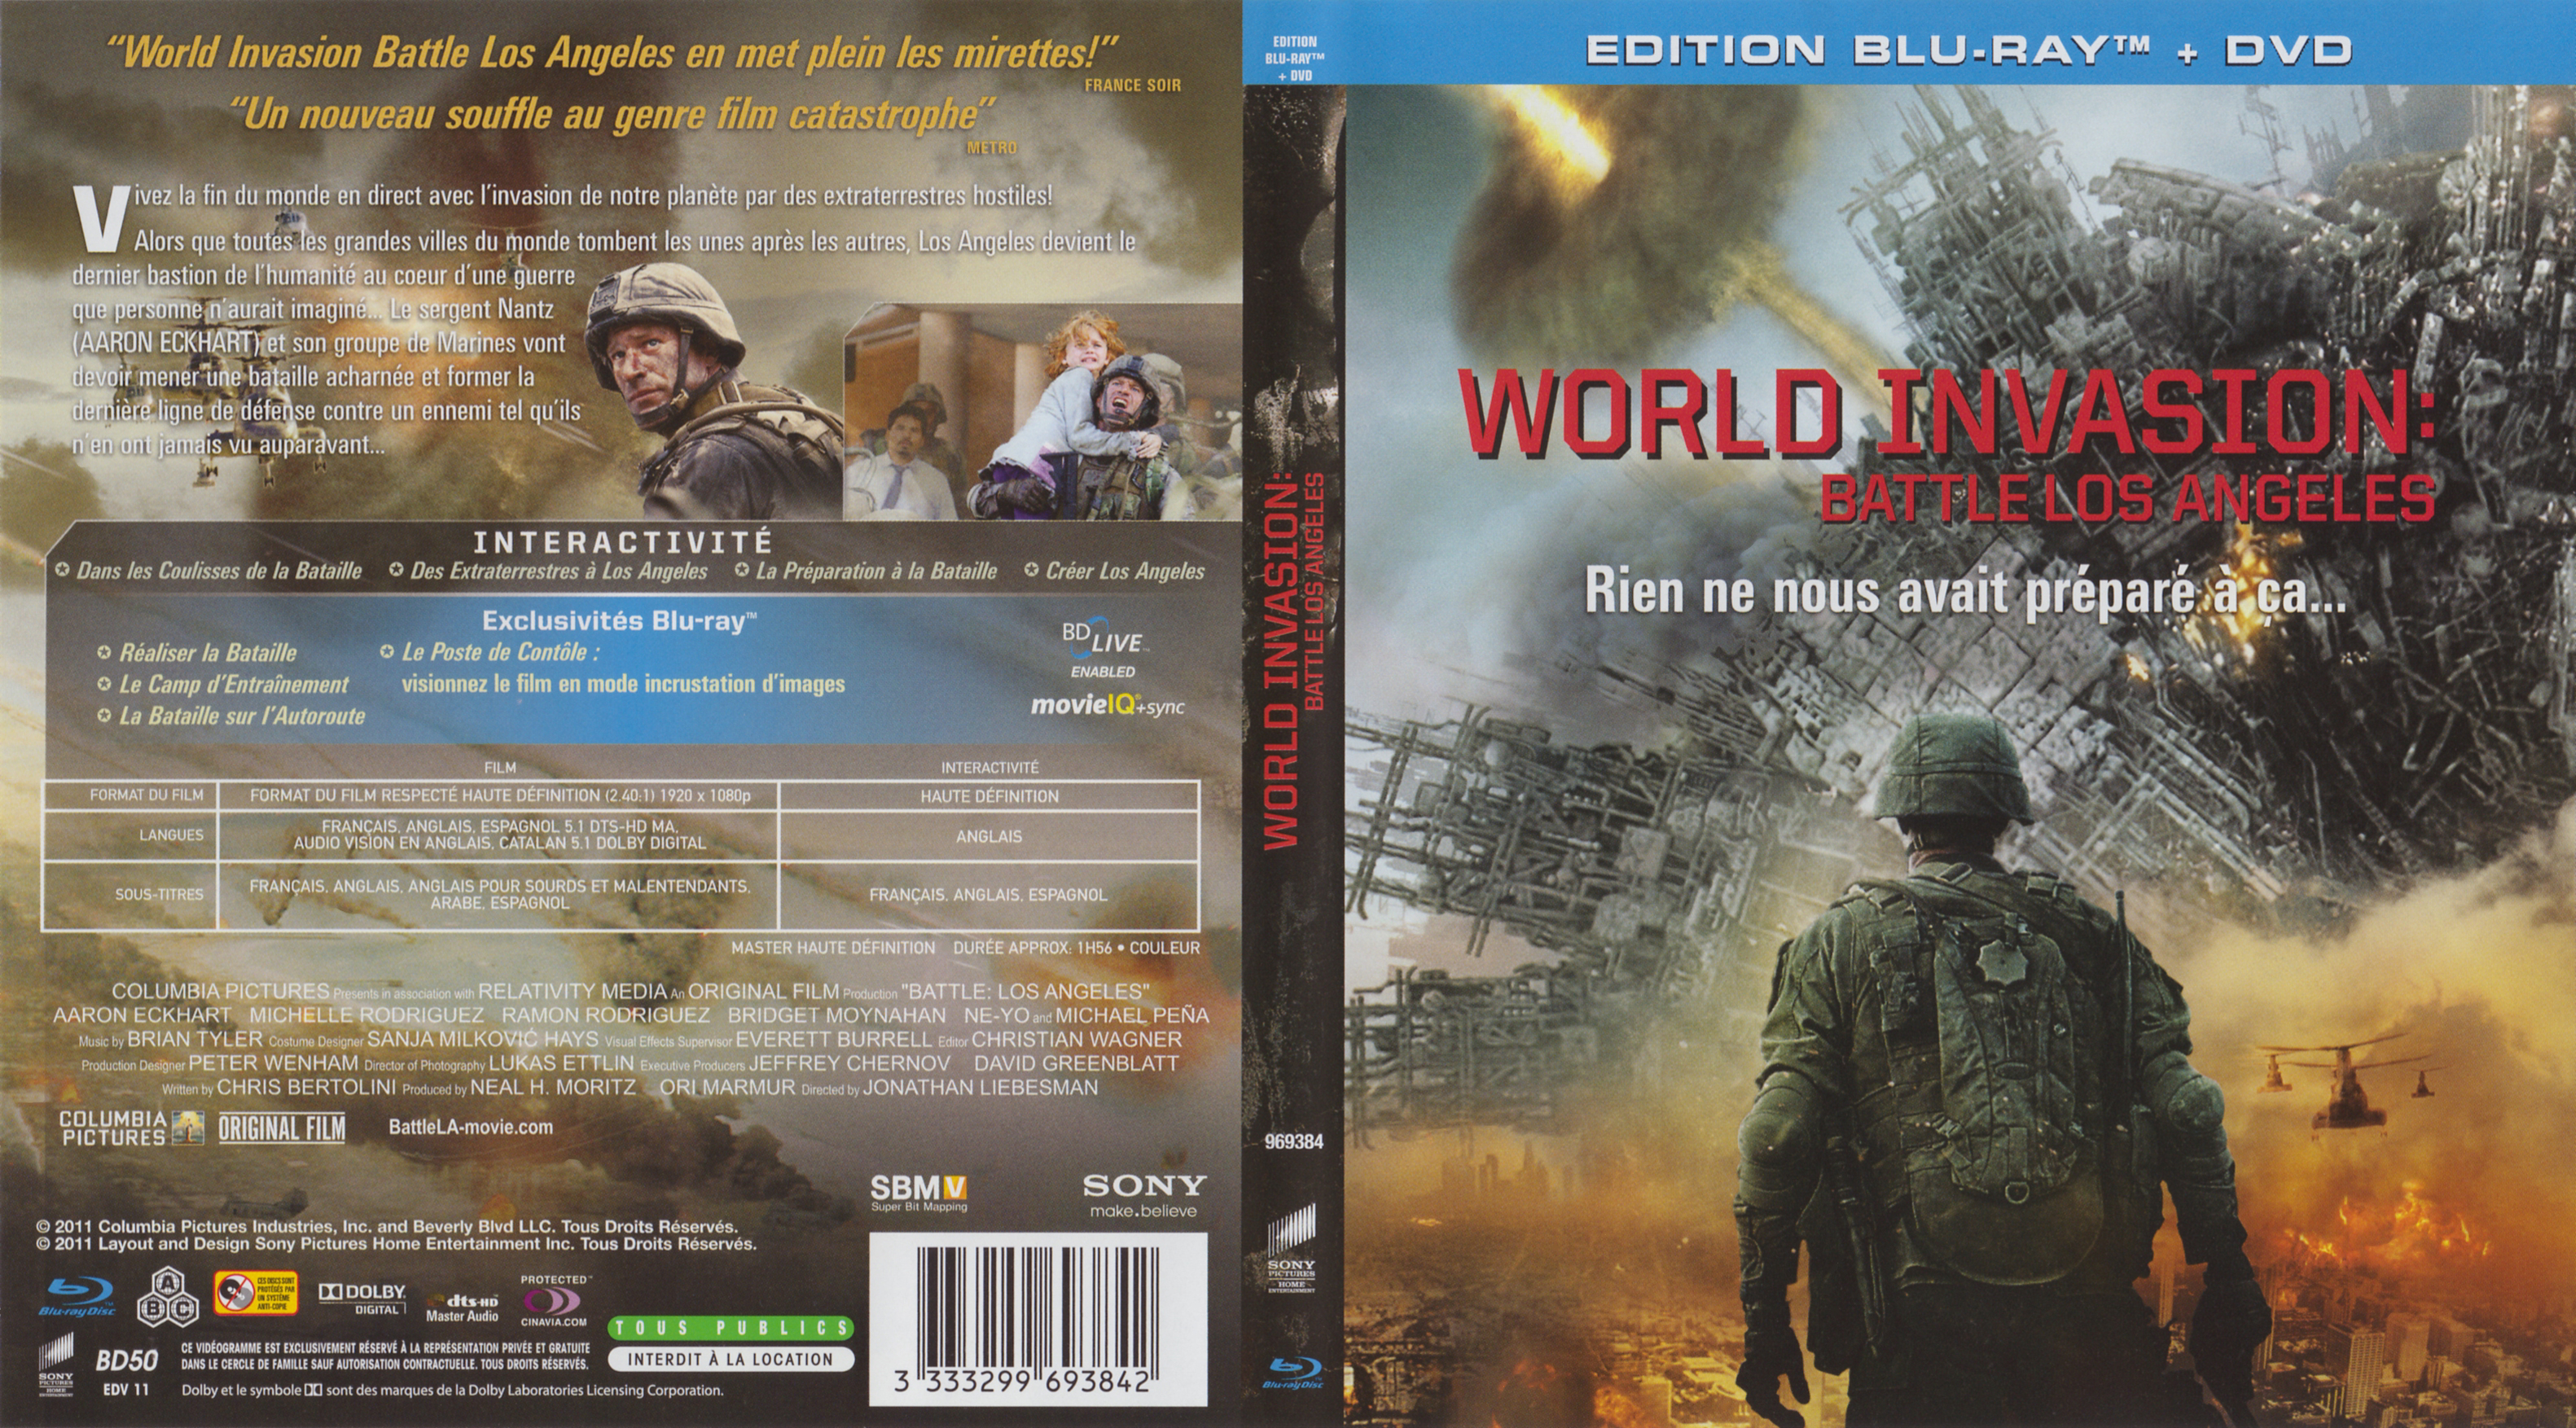 Jaquette DVD World Invasion Battle Los Angeles (BLU-RAY)